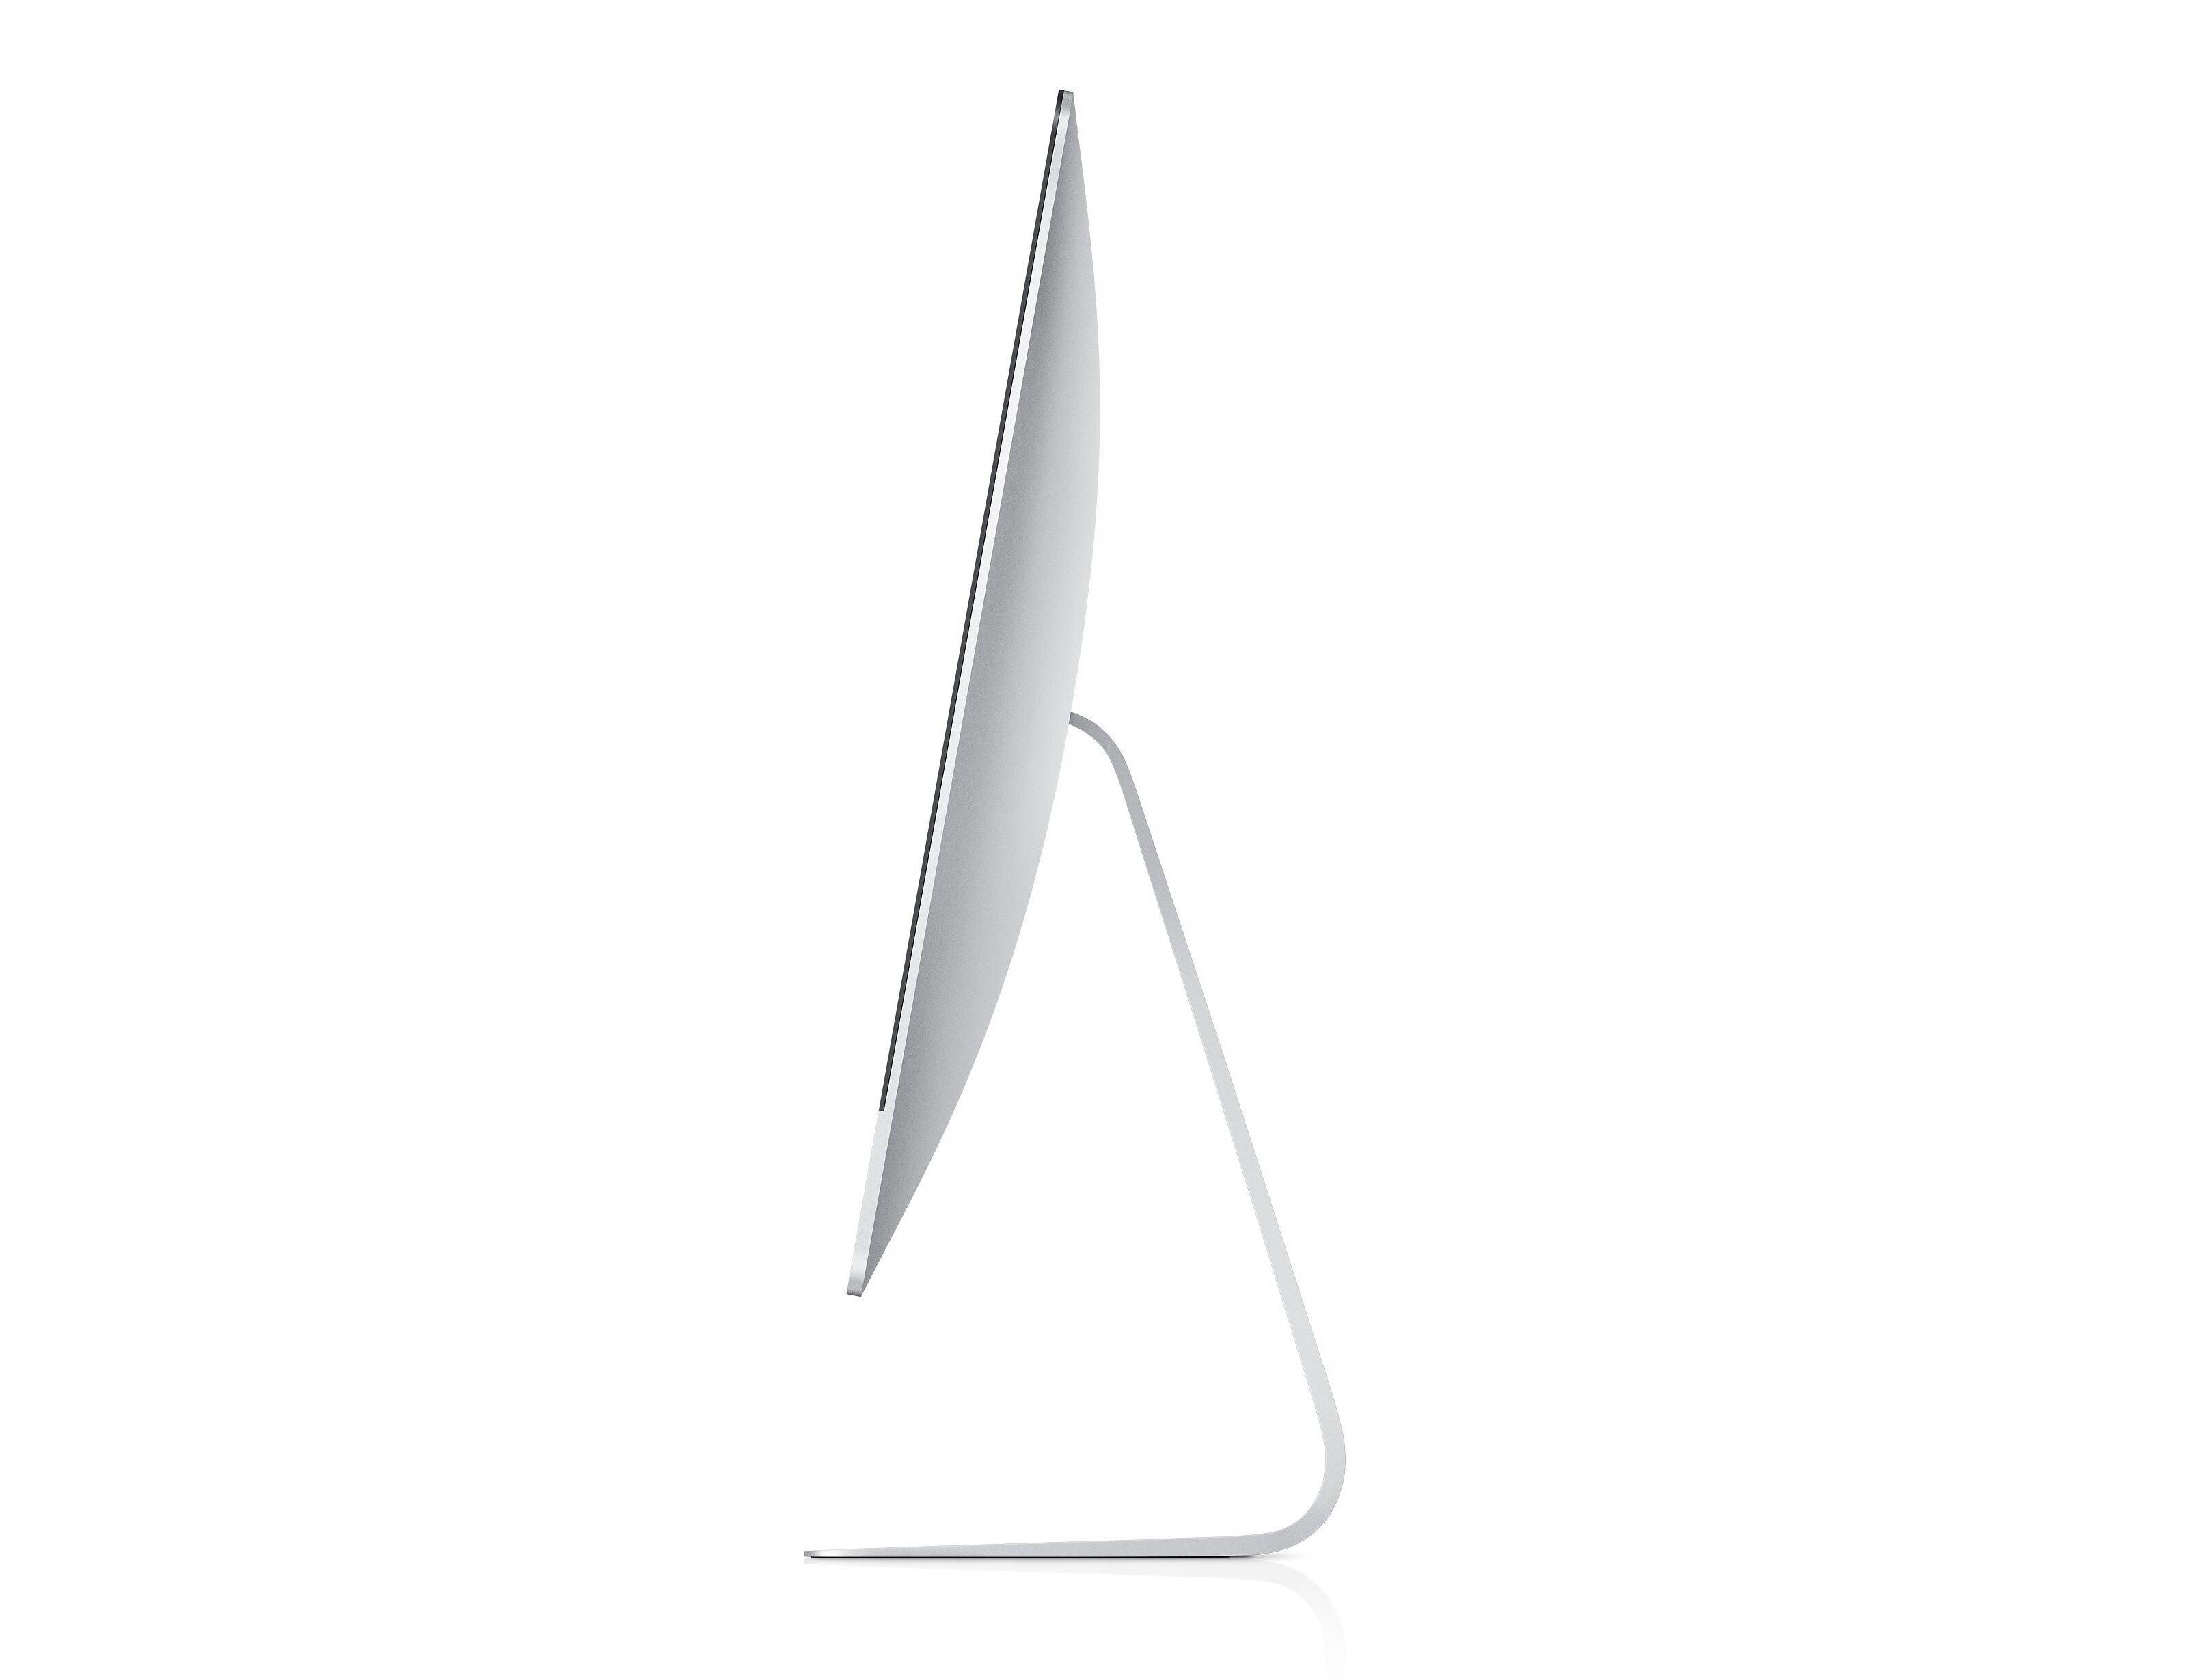 Apple  Refurbished iMac 27" 5K 2017 Core i5 3,4 Ghz 16 Gb 1 Tb HDD Silber - Wie Neu 